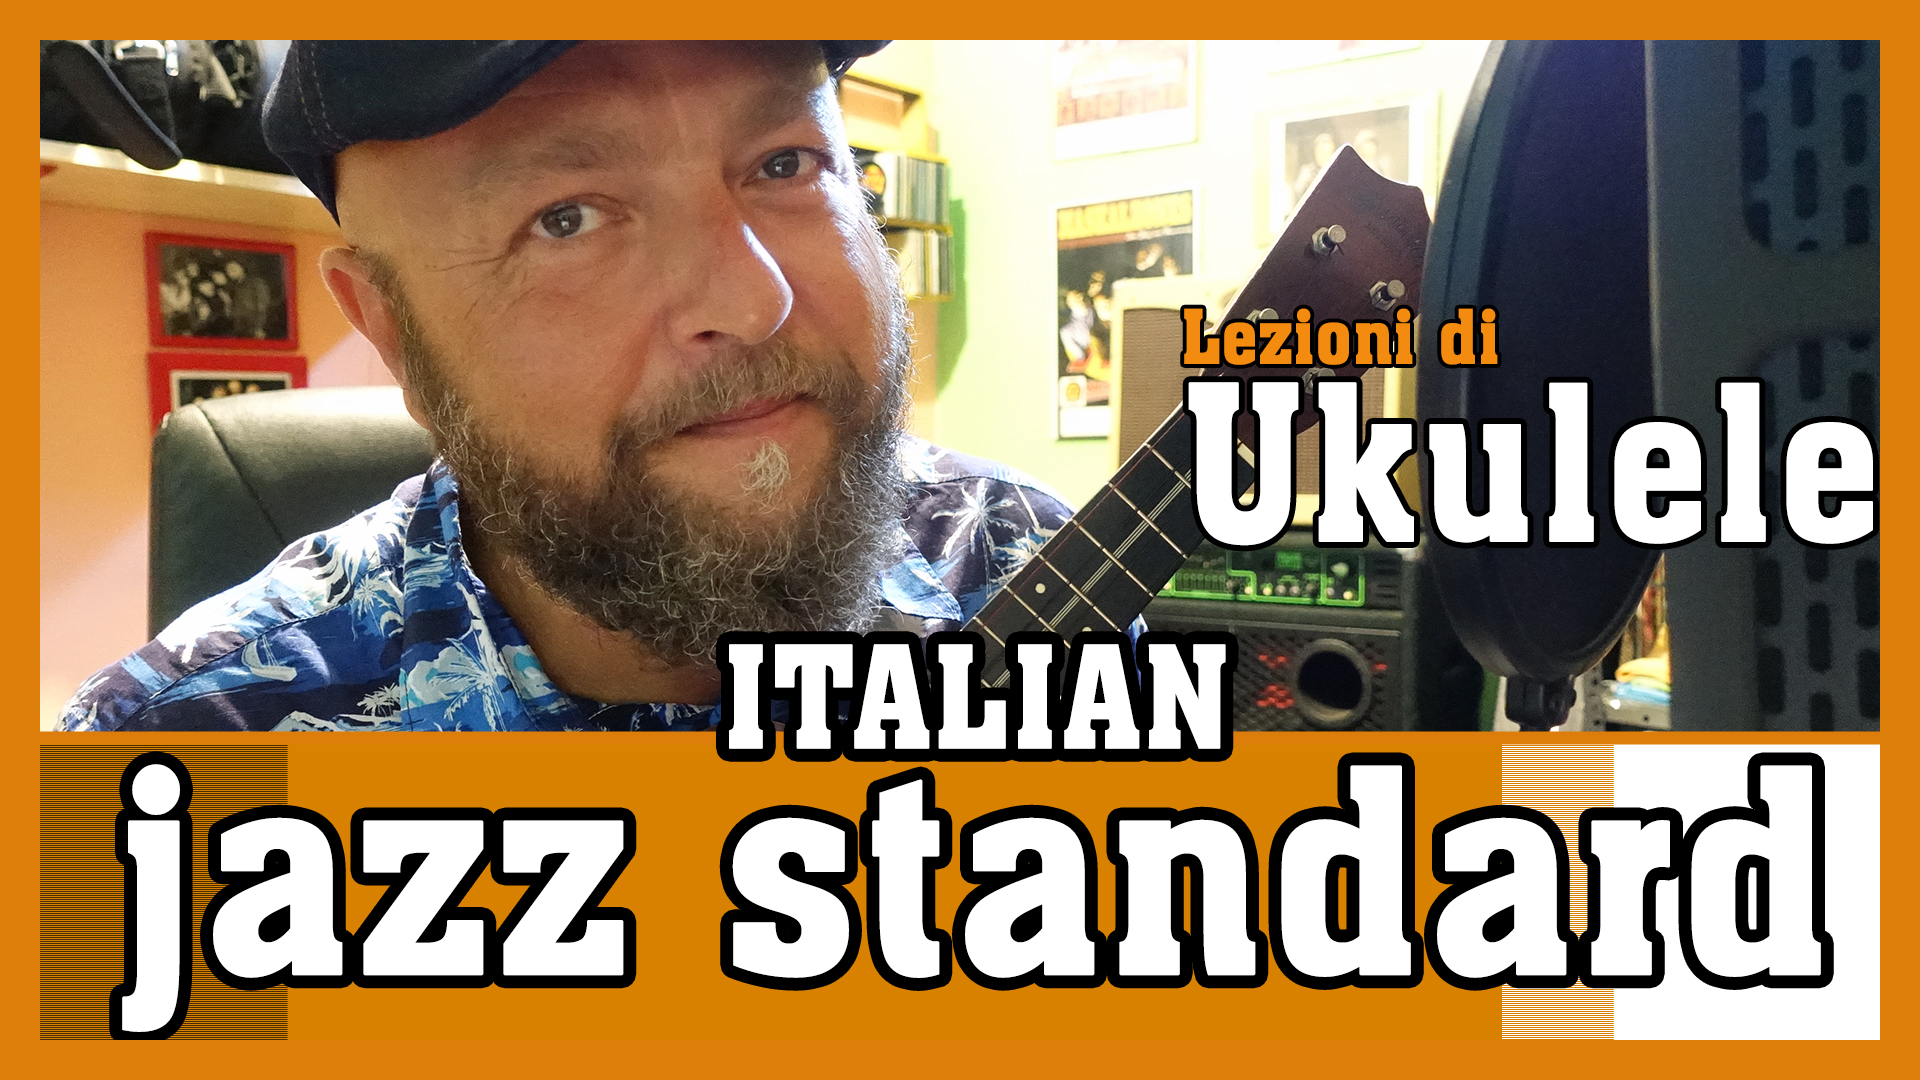 Se stasera sono qui - Italian ukulele jazz standard